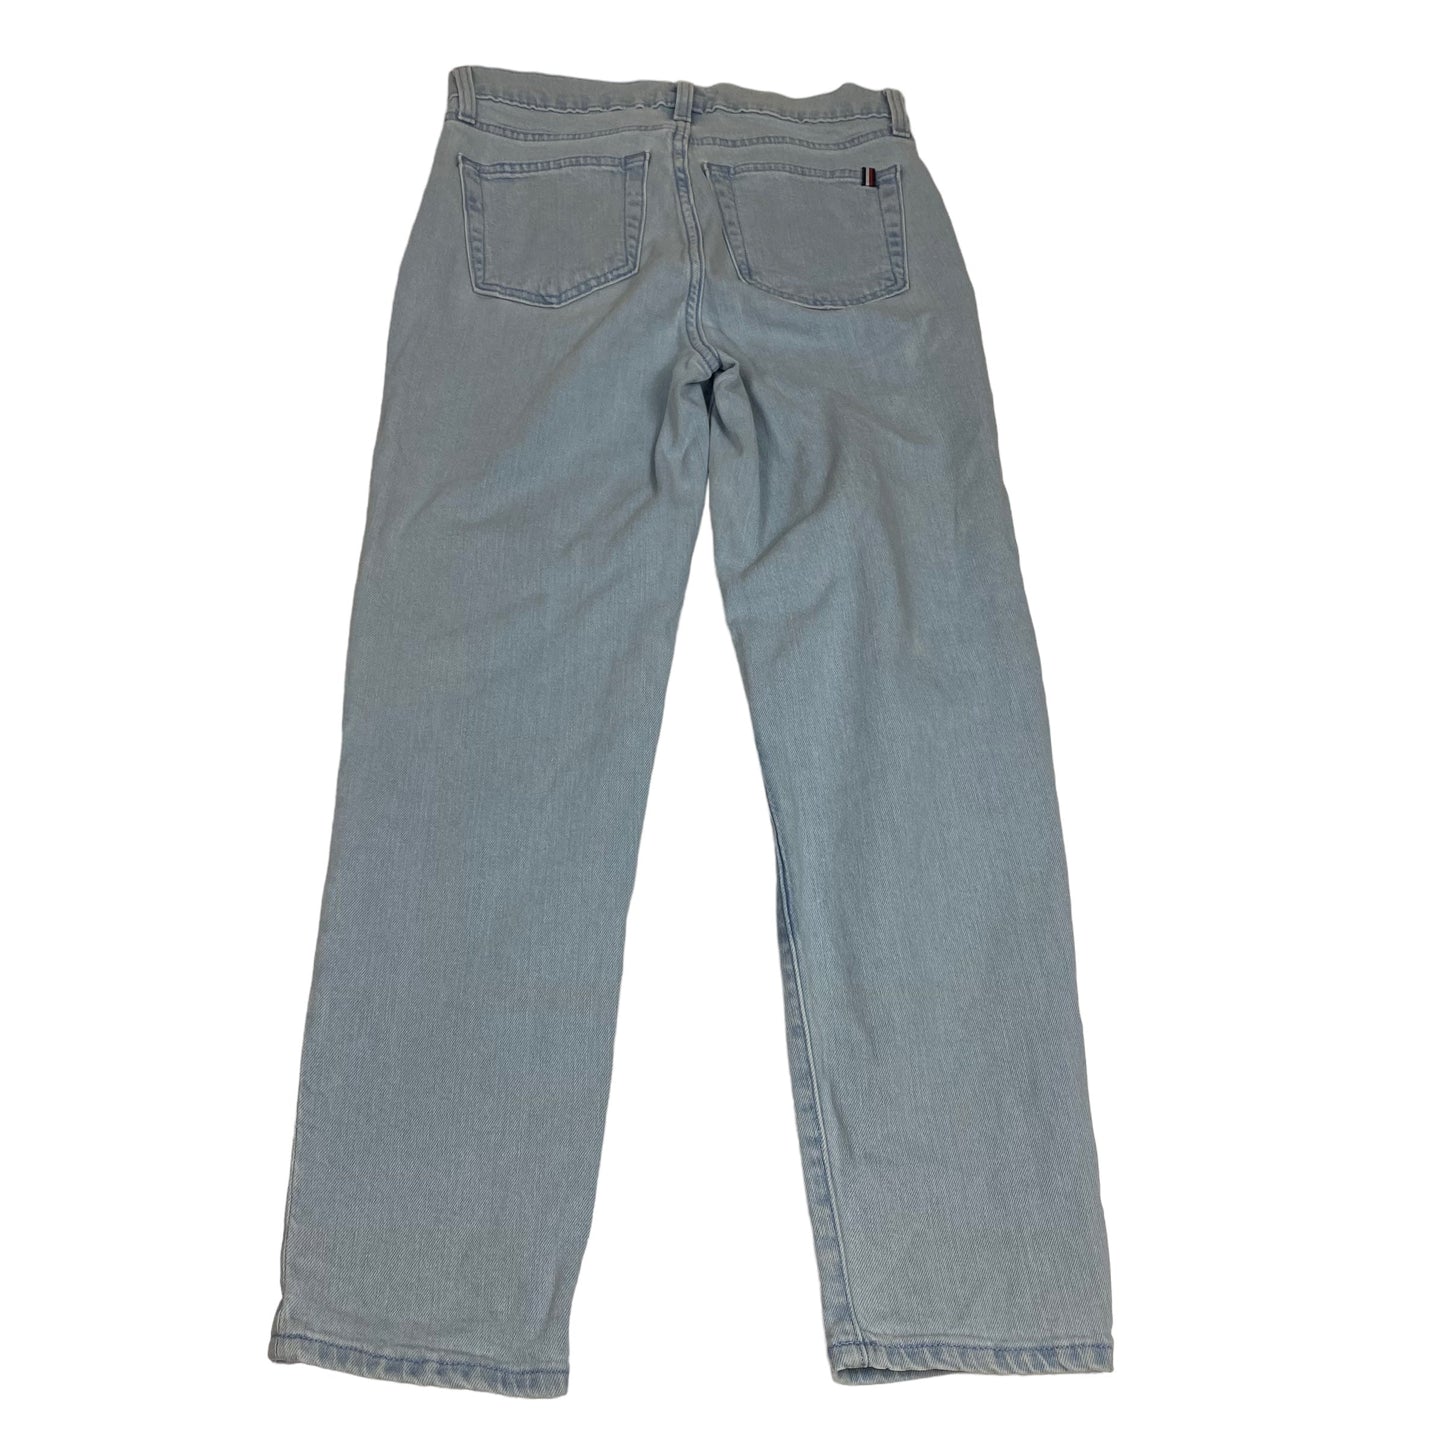 Jeans Skinny By Tommy Hilfiger  Size: 2